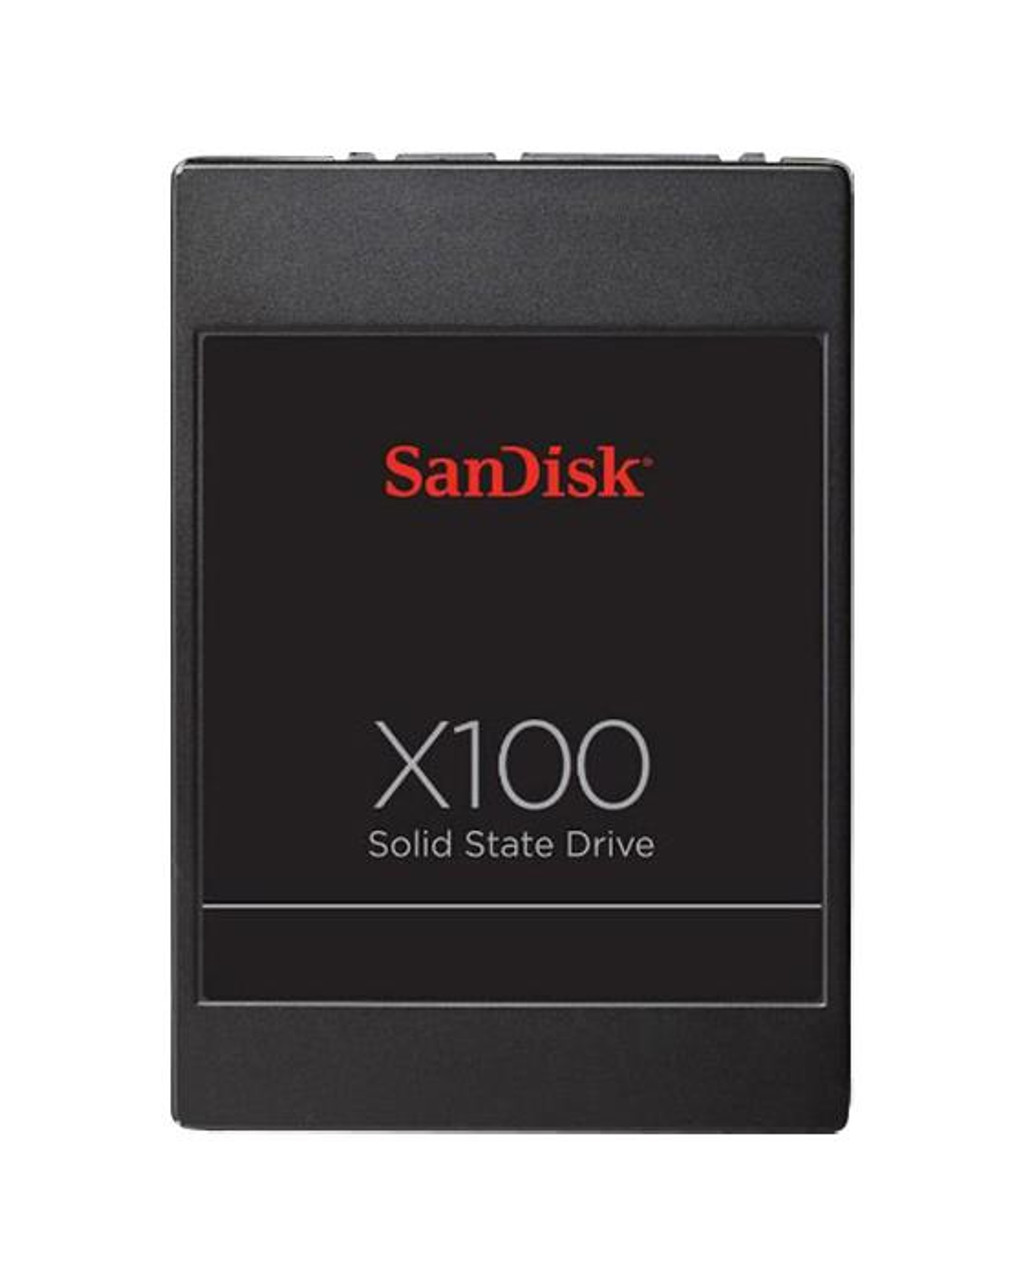 SD5SB2-256G-1010E SanDisk X100 256GB MLC SATA 6Gbps 2.5-inch Internal Solid State Drive (SSD)